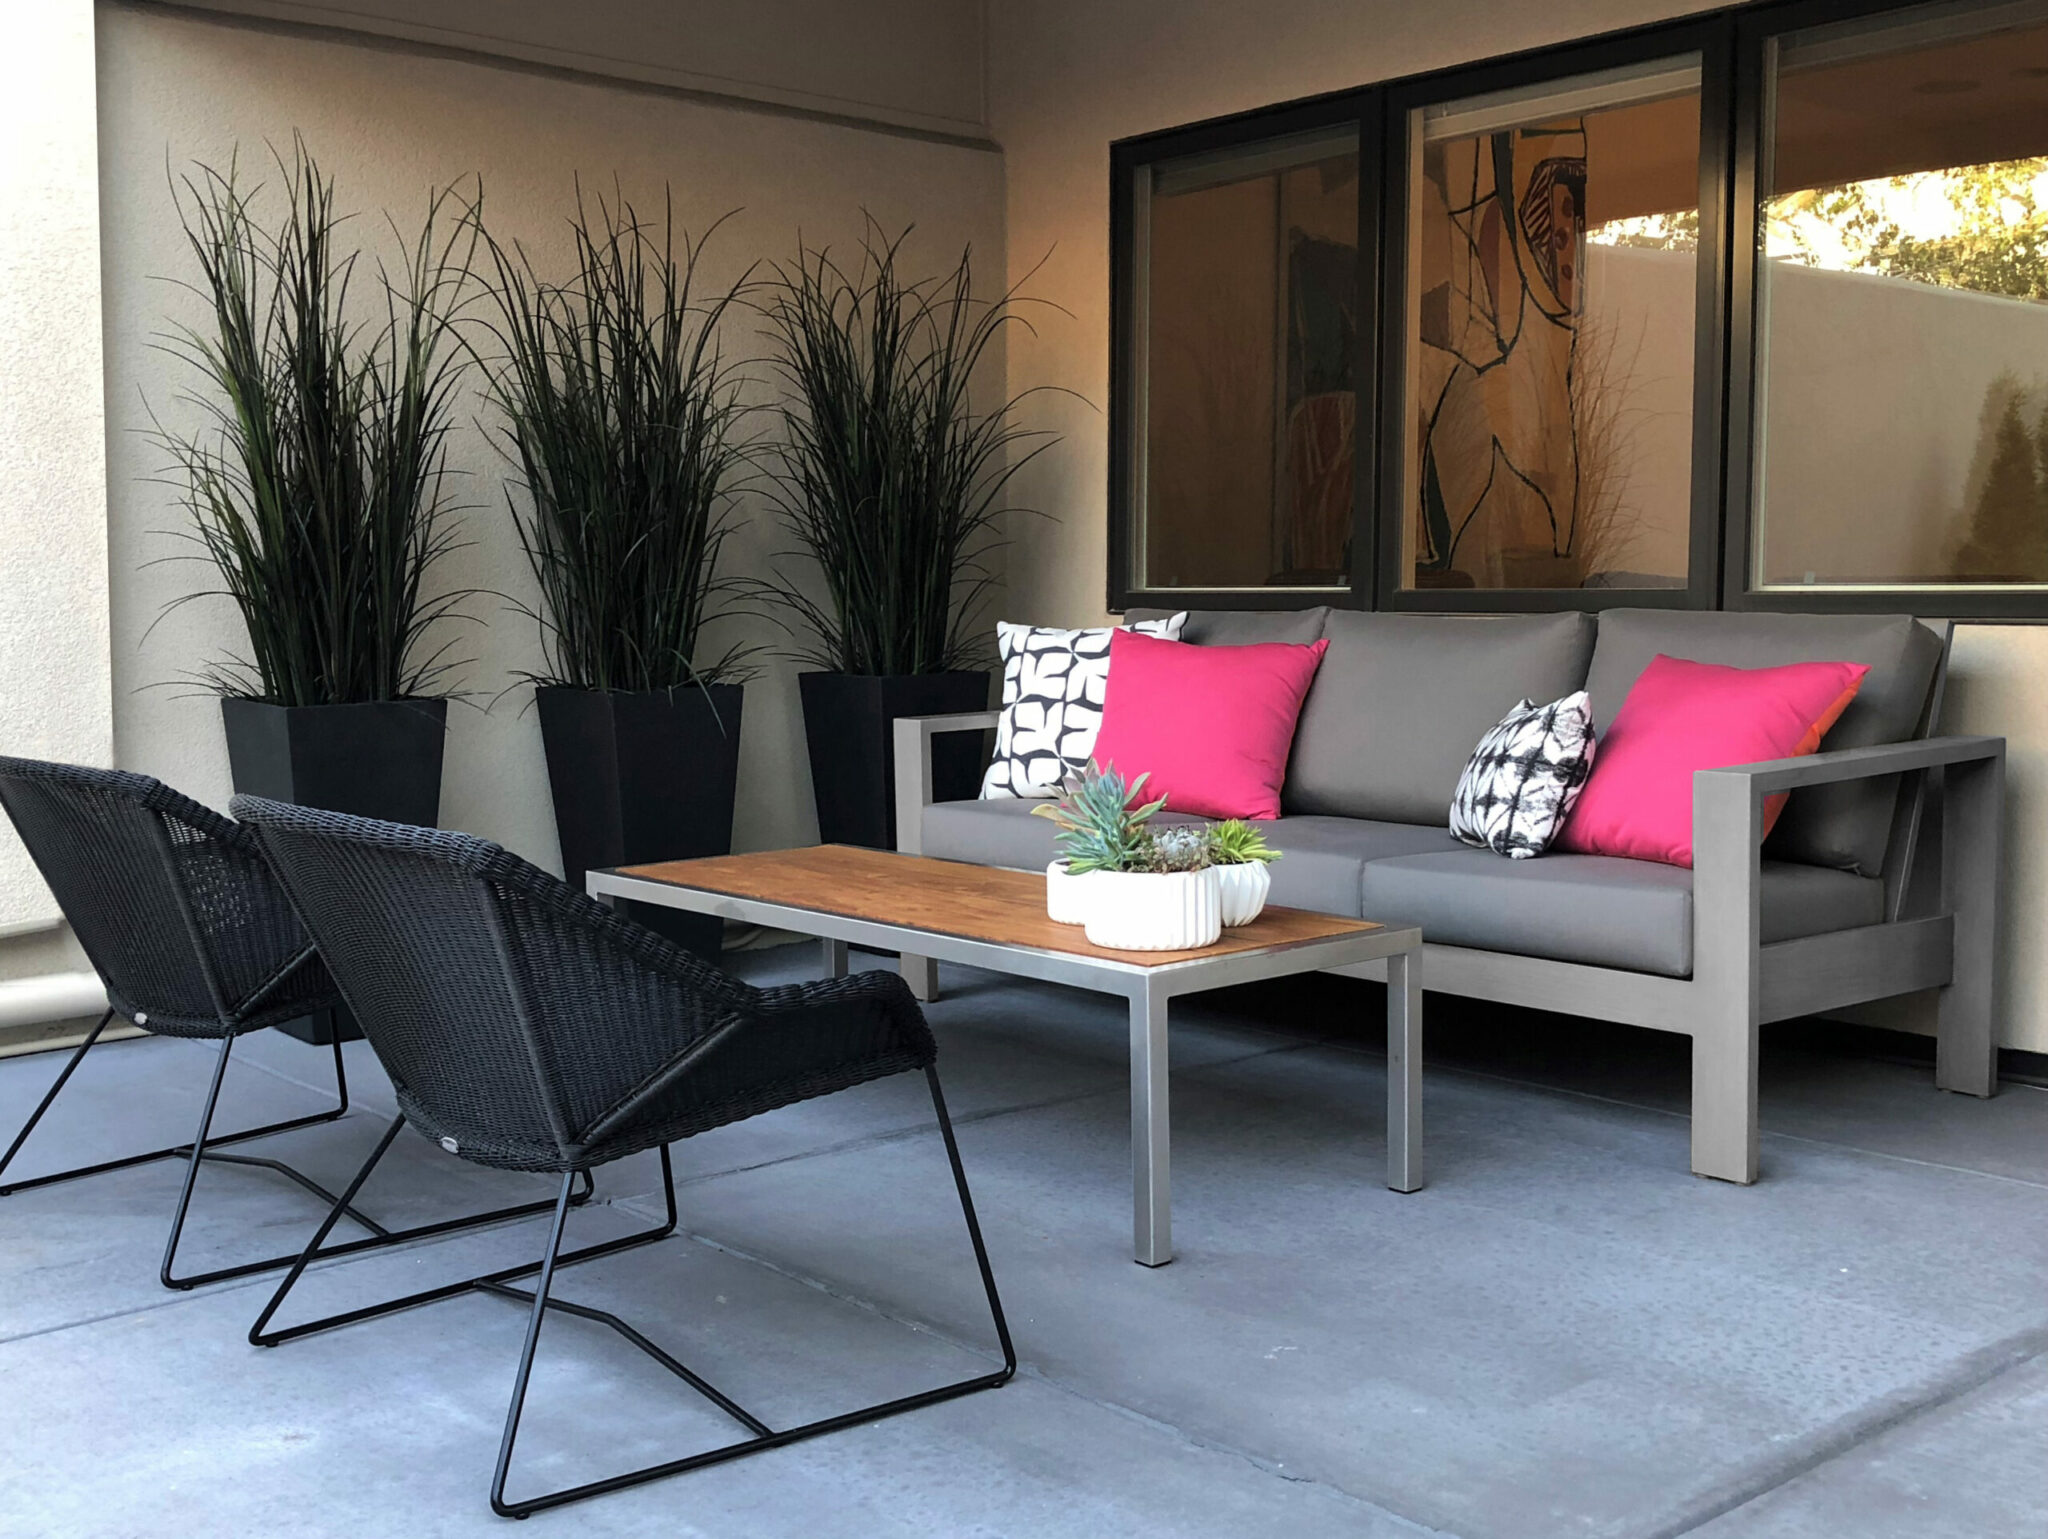 Creative Living Denver Colorado Cherry Creek Magazine Outdoor furniture design patio design Micheline Stone